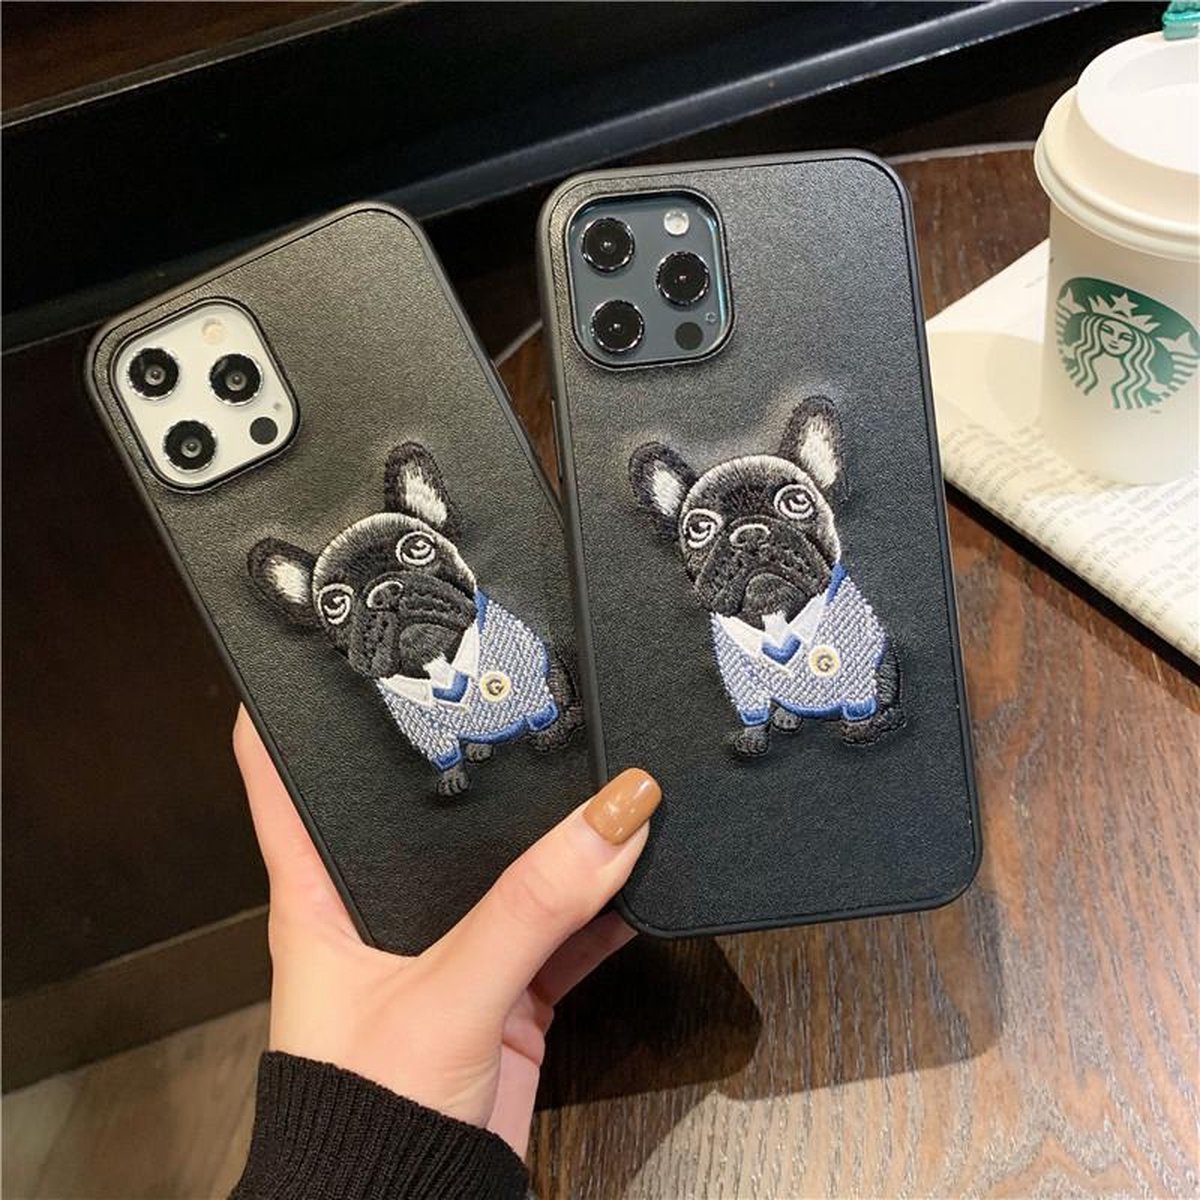 Bulldog iPhone hoesje/case - iPhone 12 promax case - Shockproof Case - zwart - hond